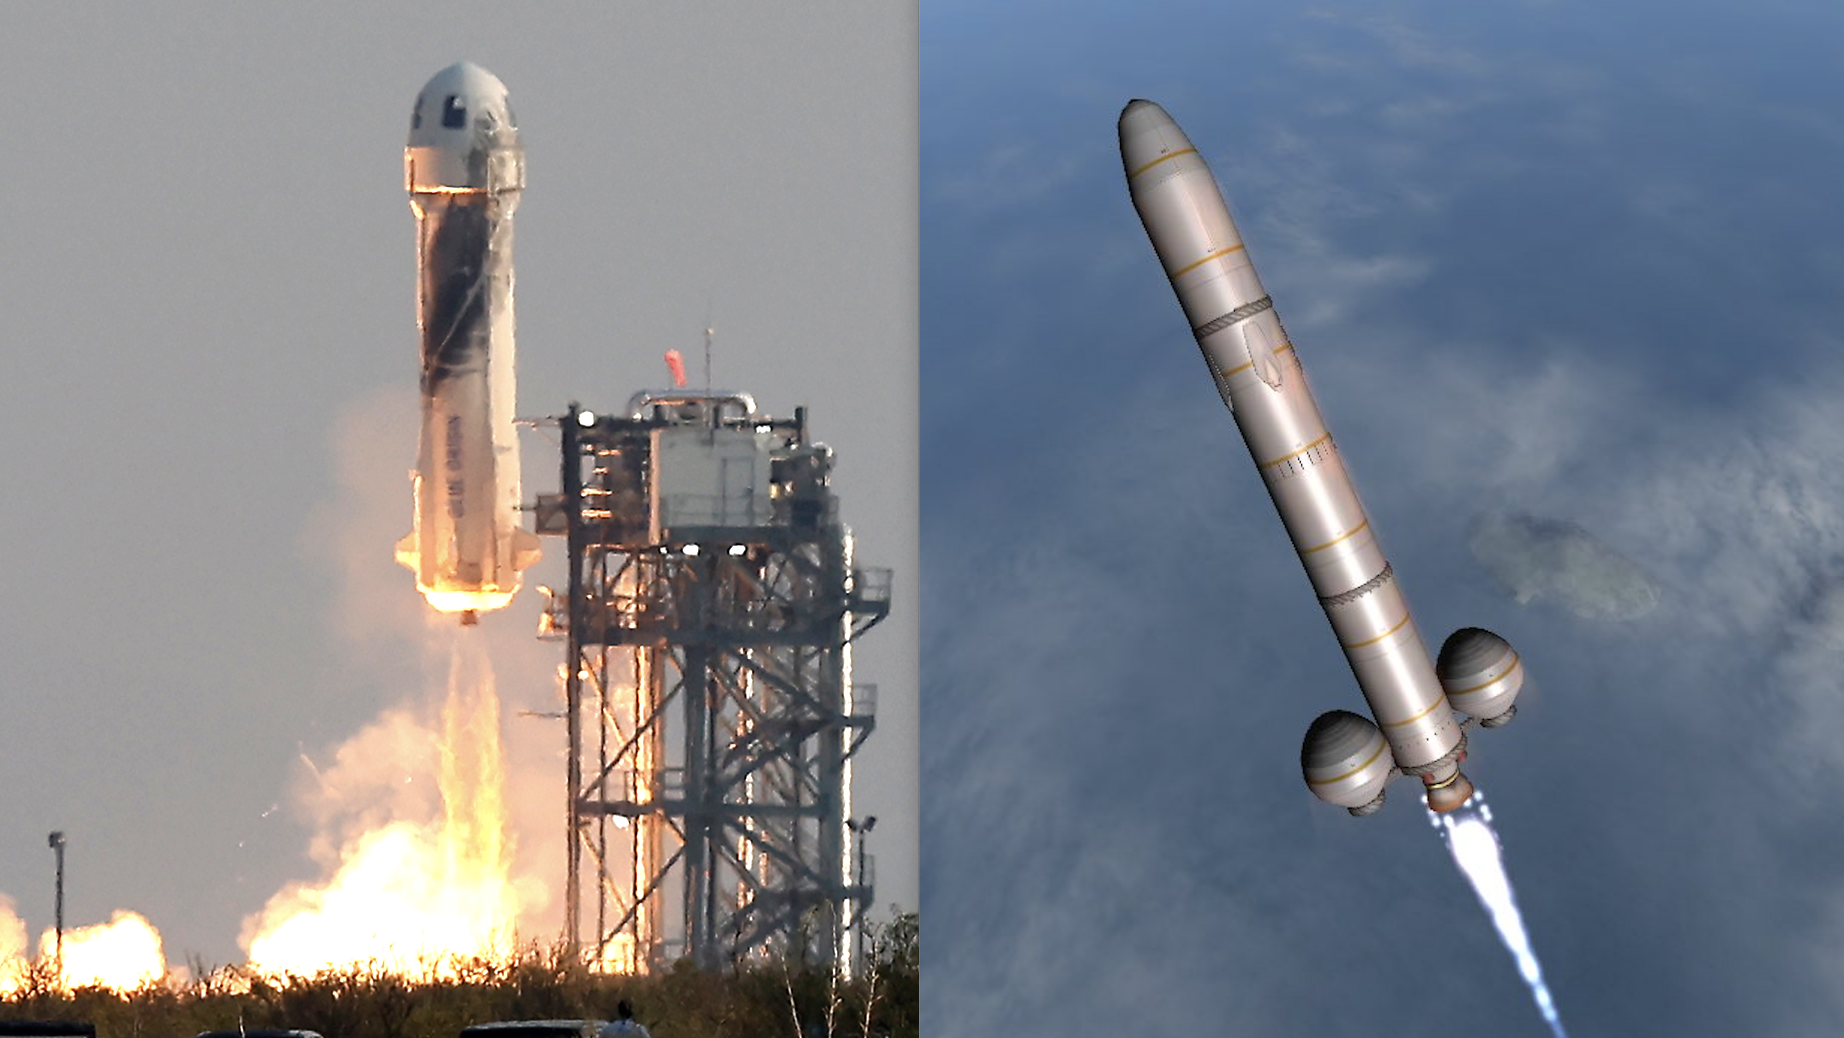 Bezos' and Dr. Evil's rockets